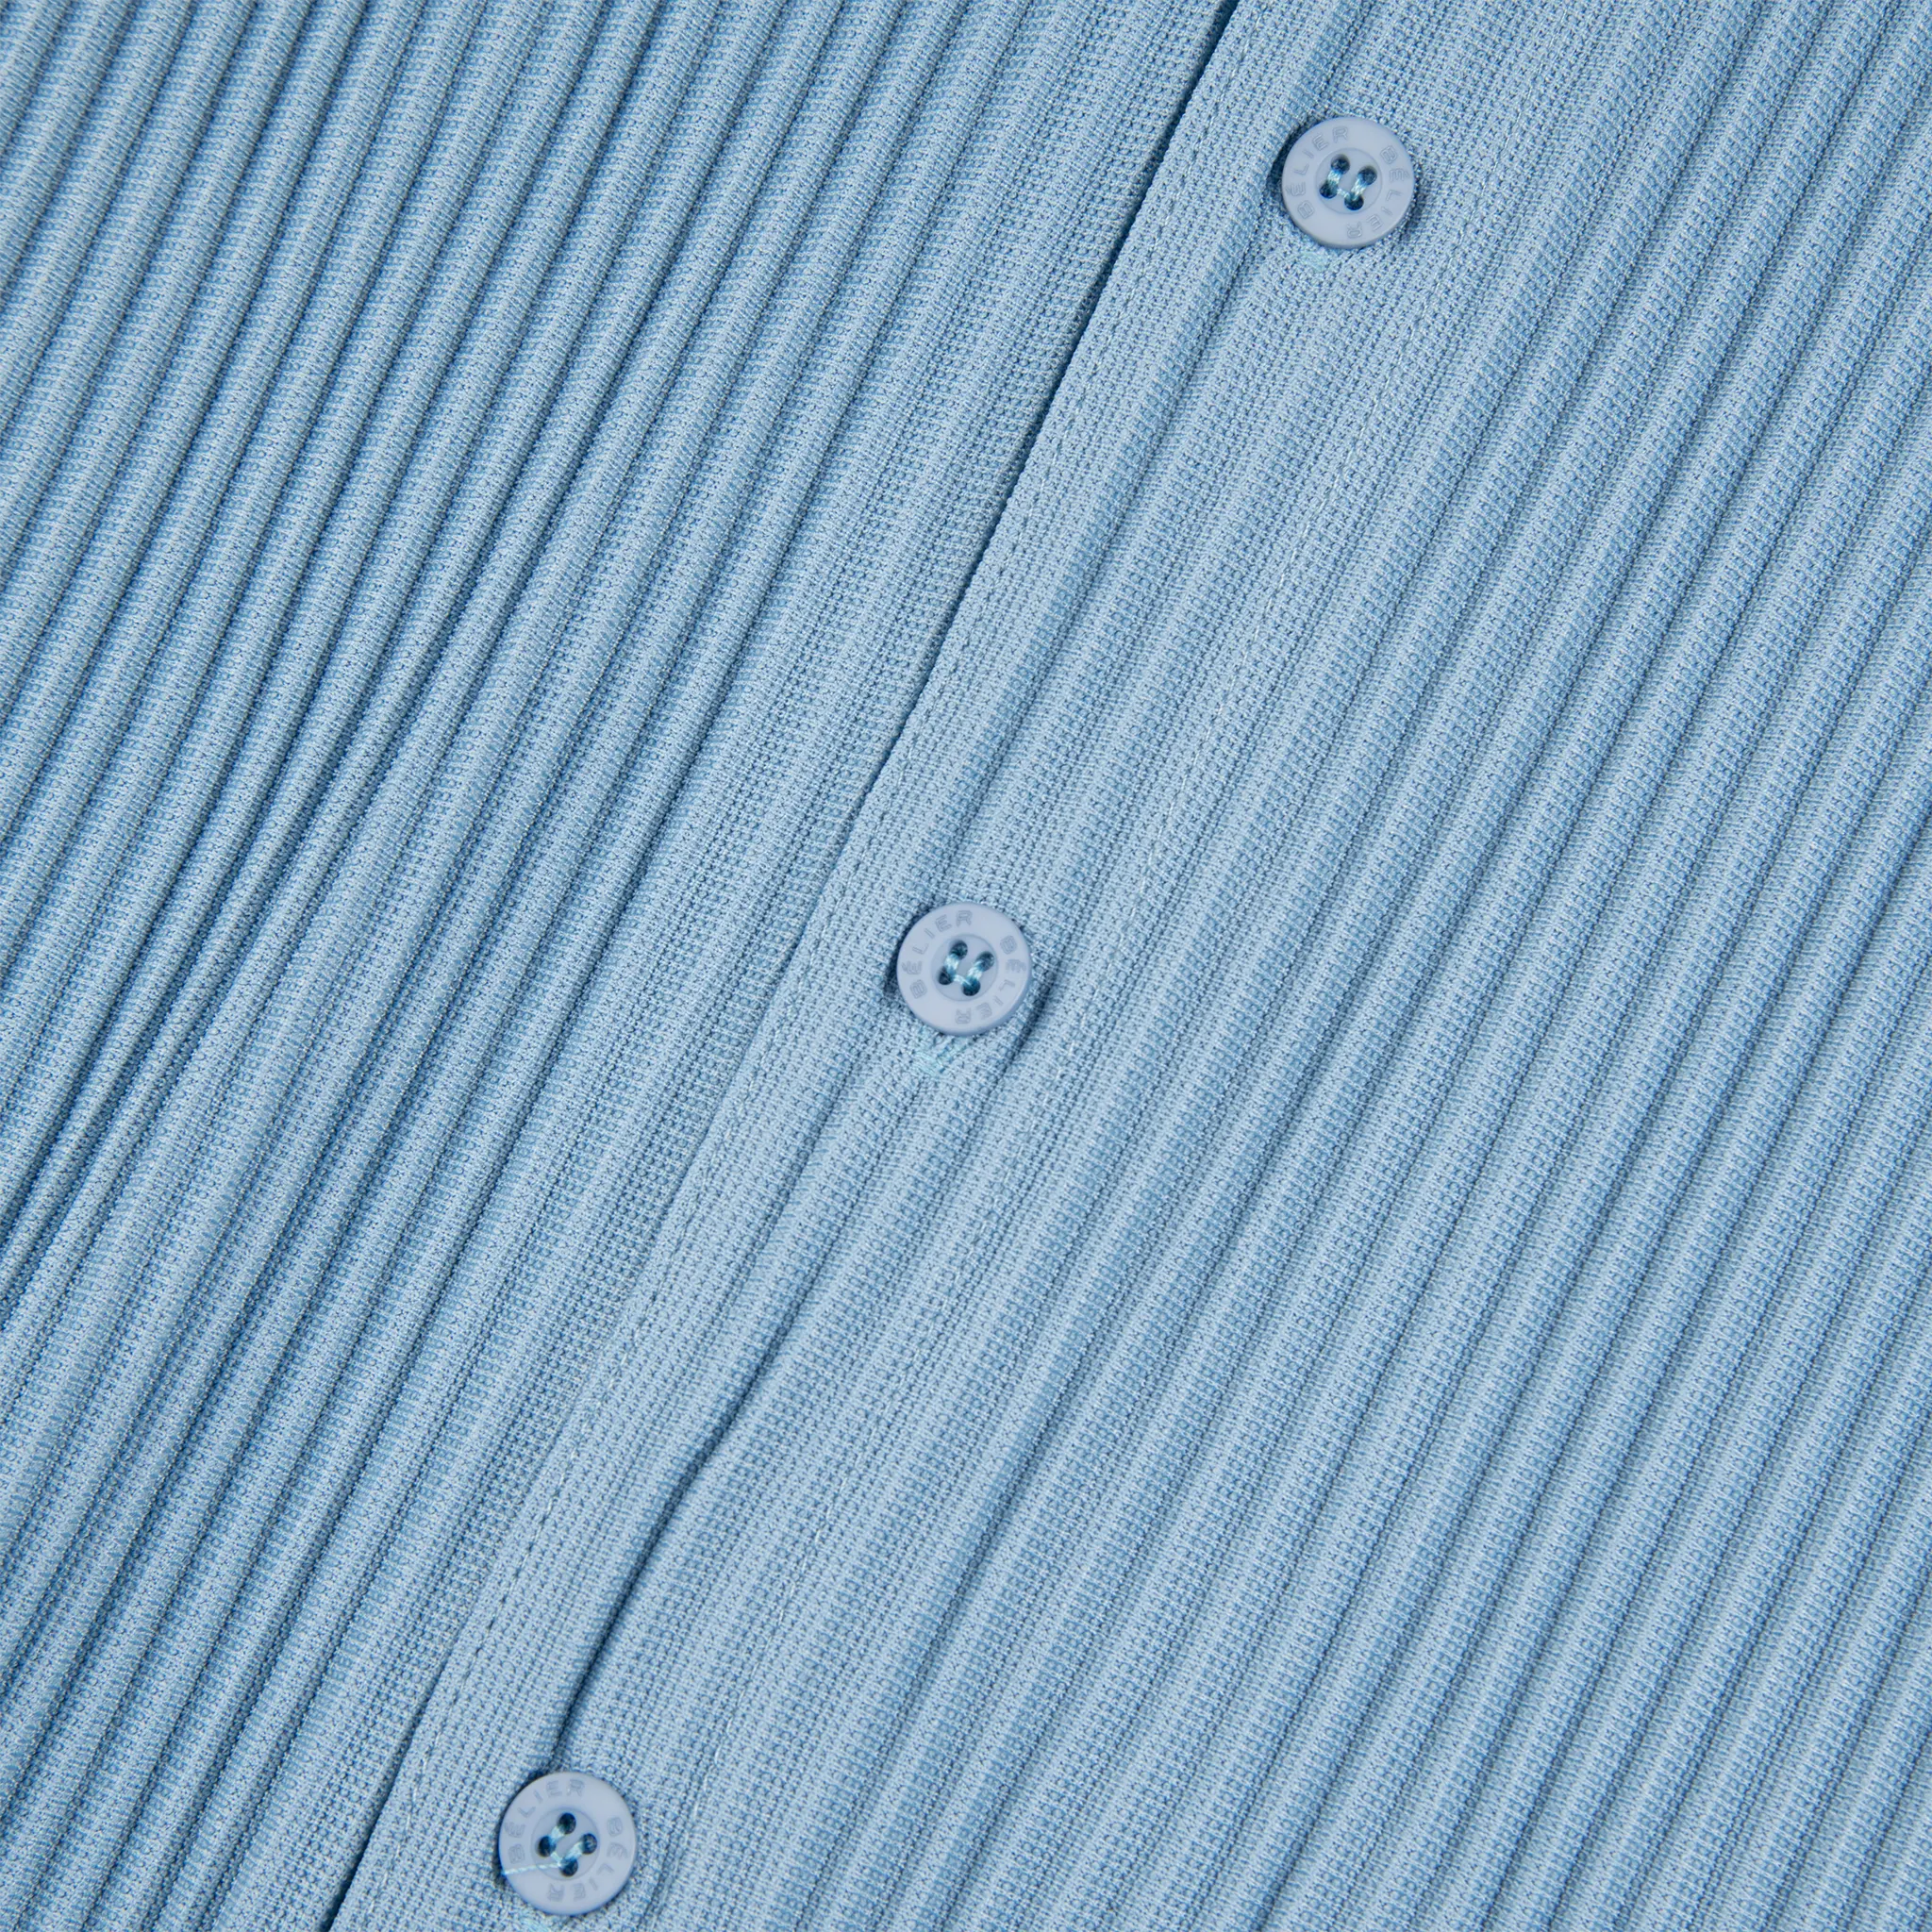 Detail view of Belier Pleated Short Sleeve Light Blue Resort Shirt BM-073